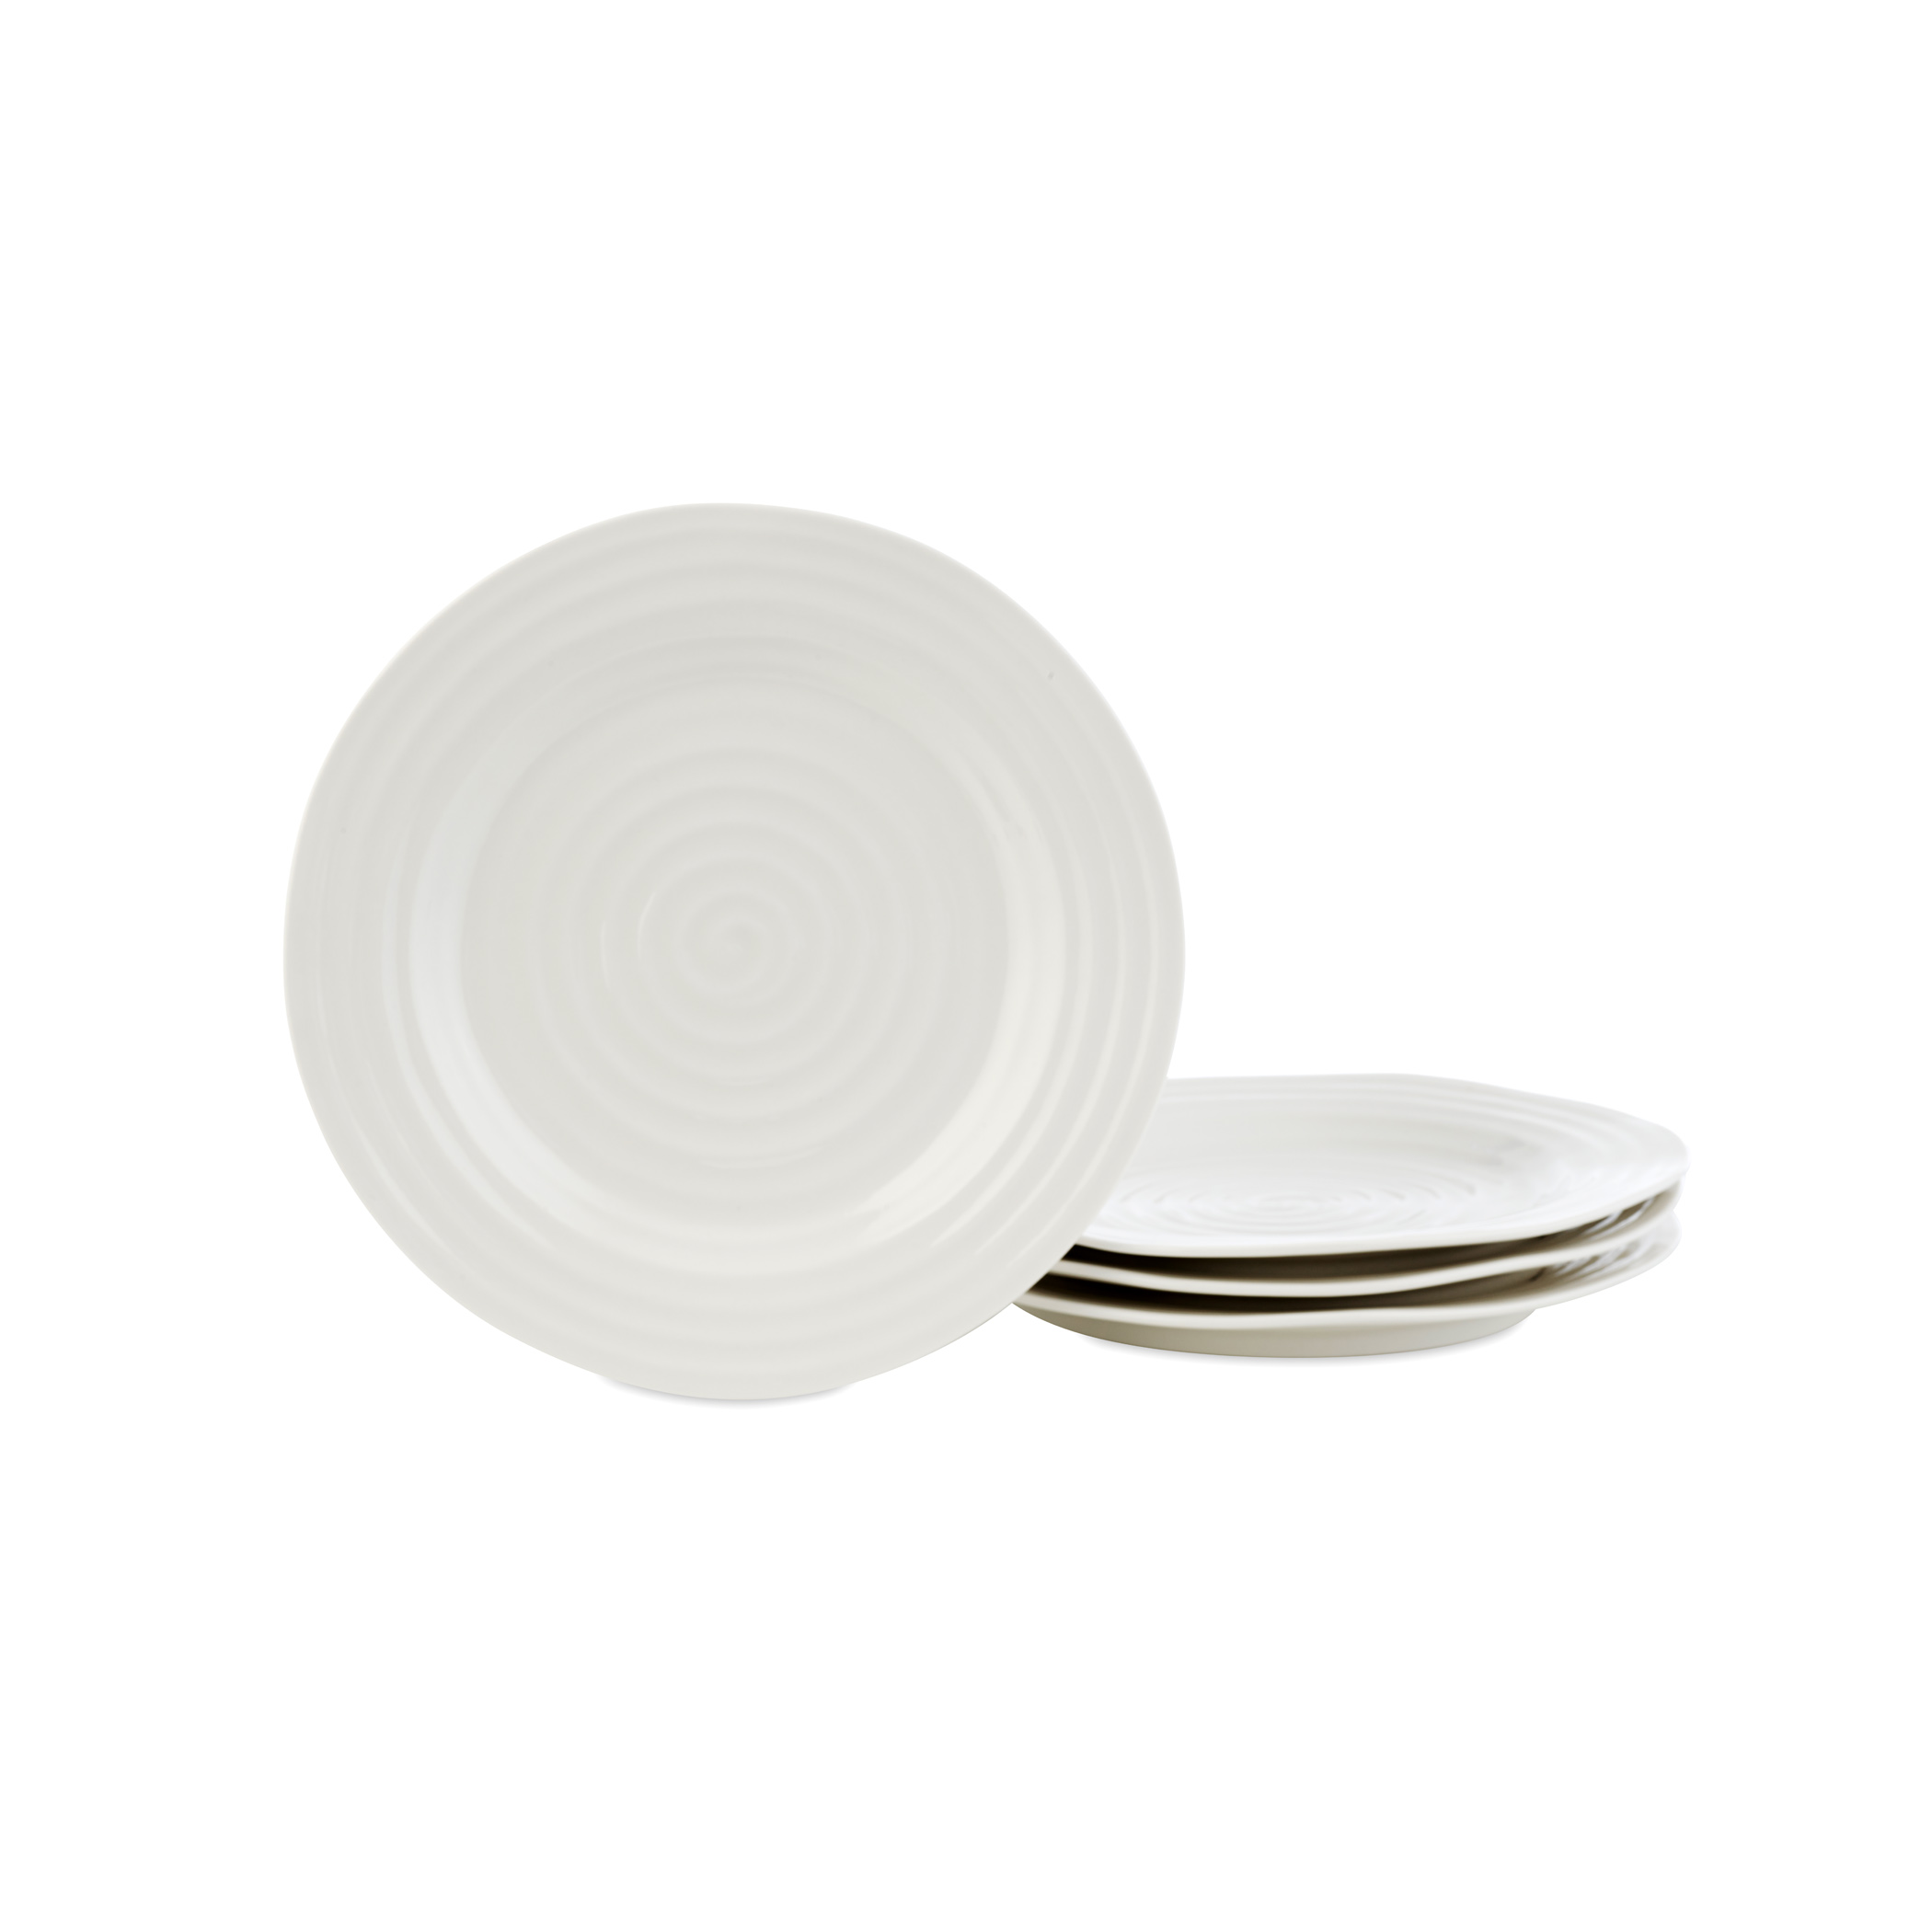 Portmeirion Sophie Conran White Set of 4 Dinner Plates image number null